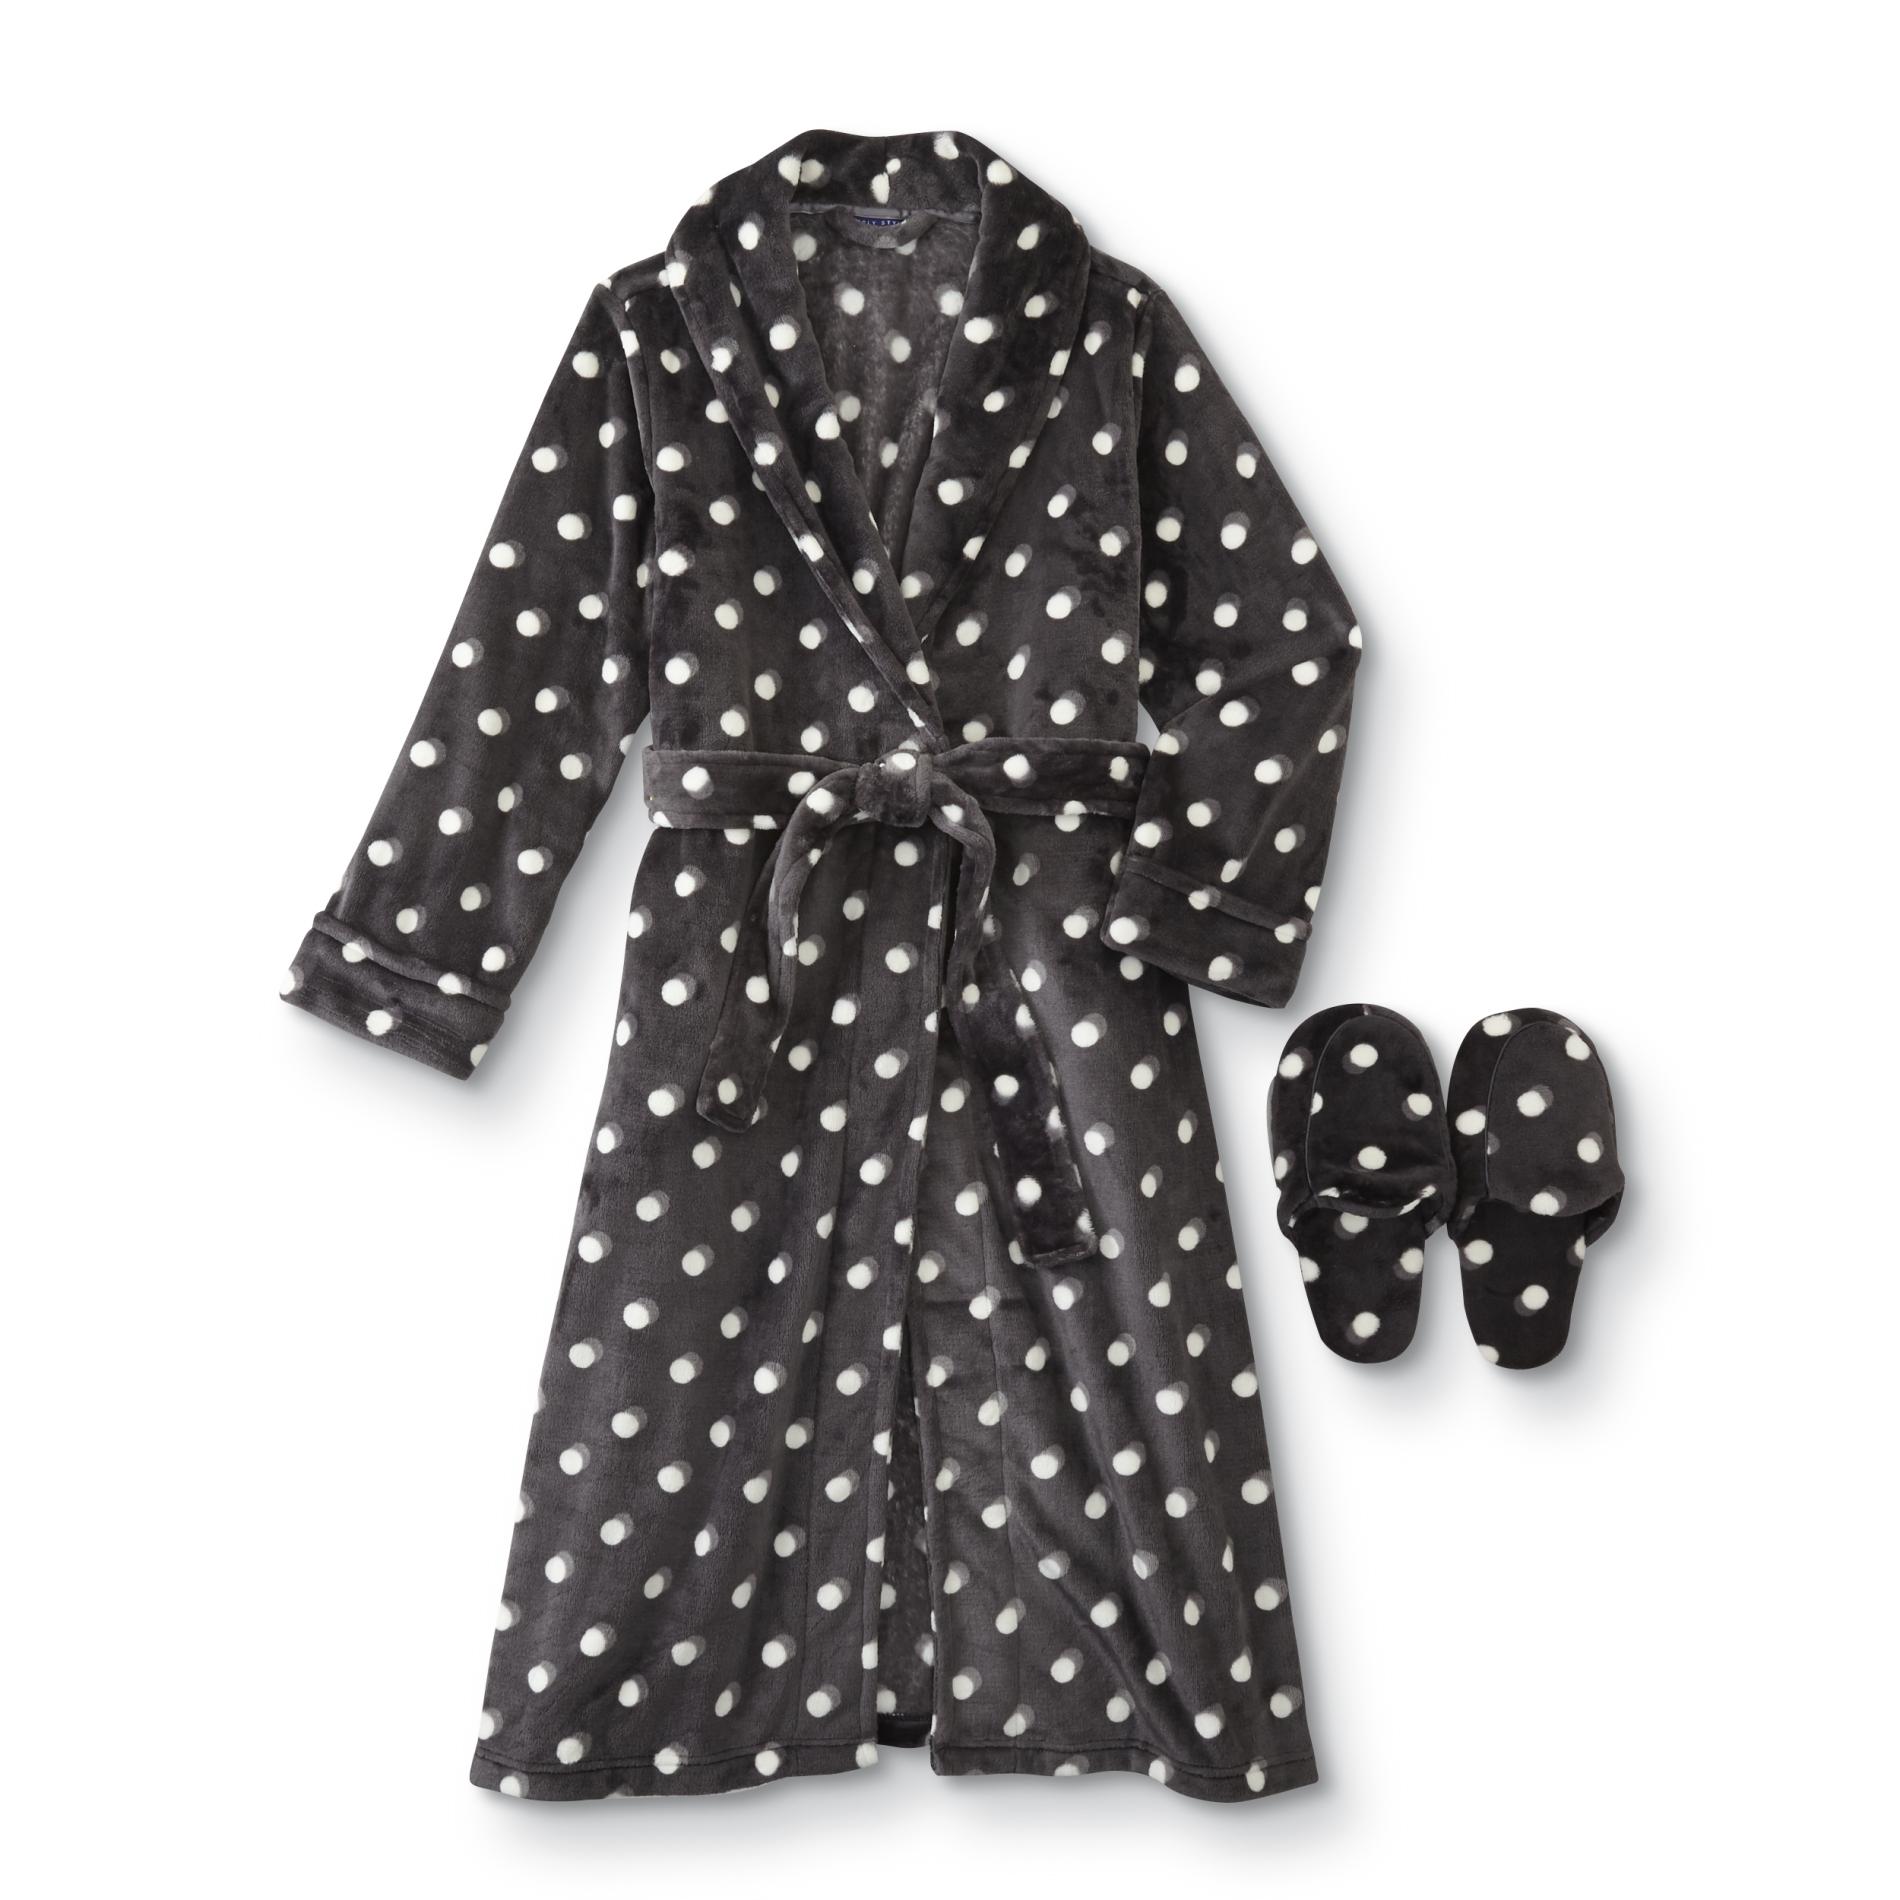 Simply Styled Women's Plush Robe & Slippers - Polka Dot